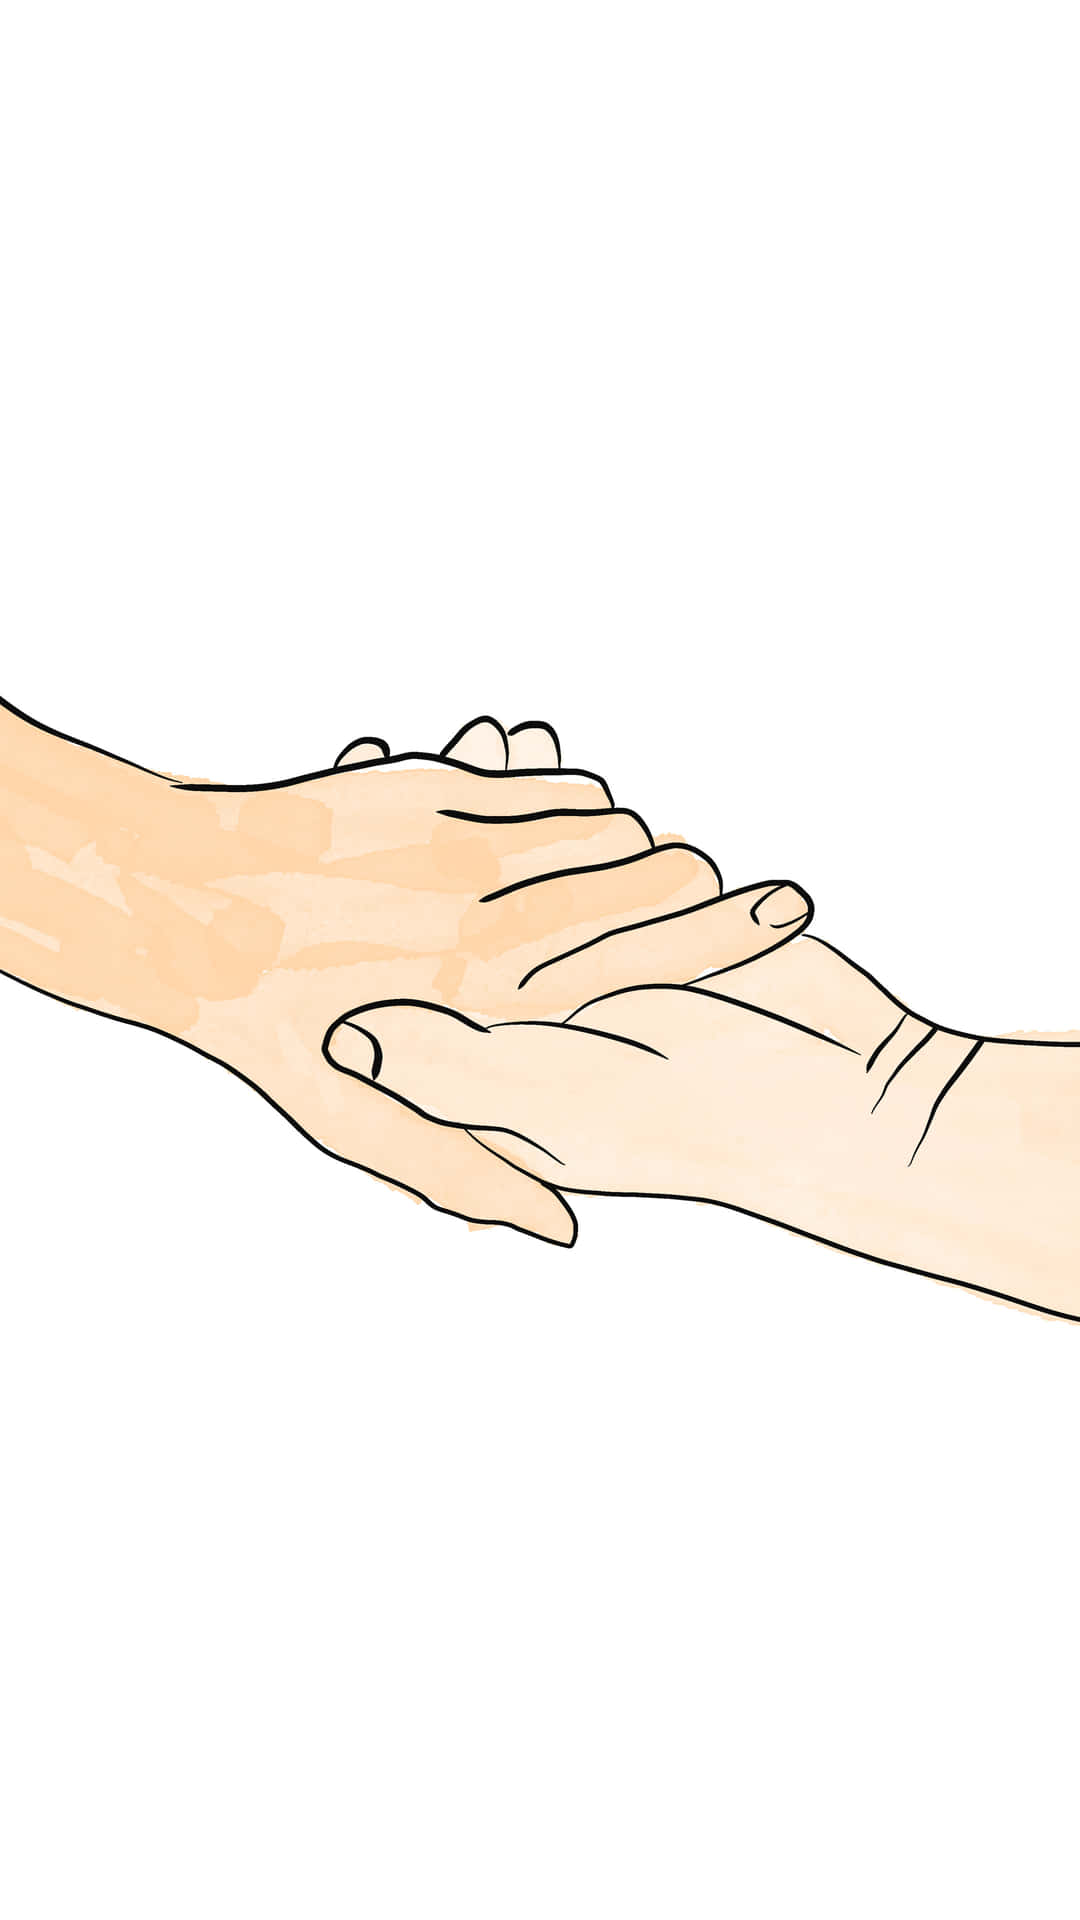 Handshake Drawing Wallpaper